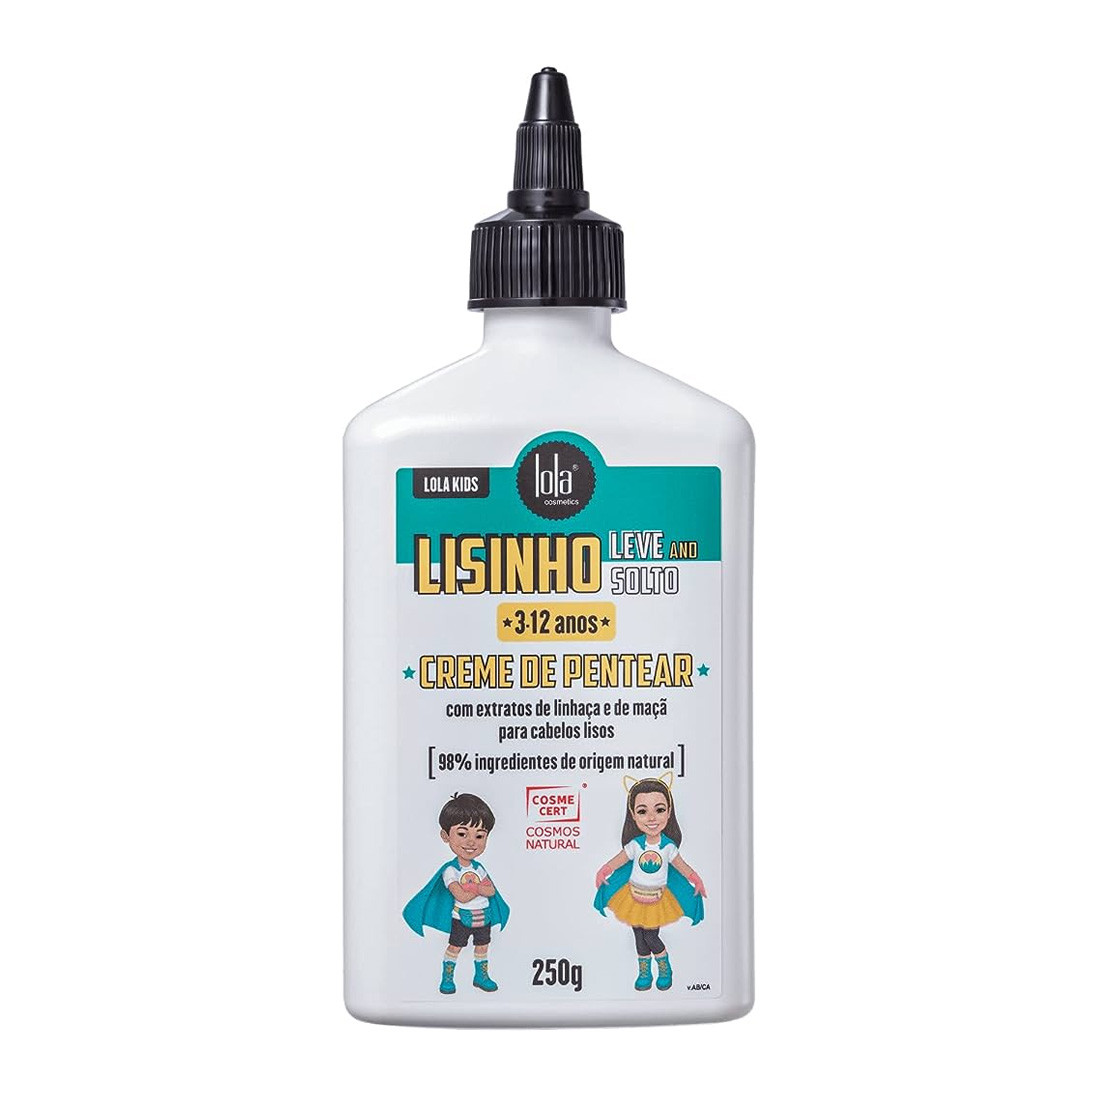 Lola Cosmetics Lisinho, Leve And Solto Cream - Детский крем для волос